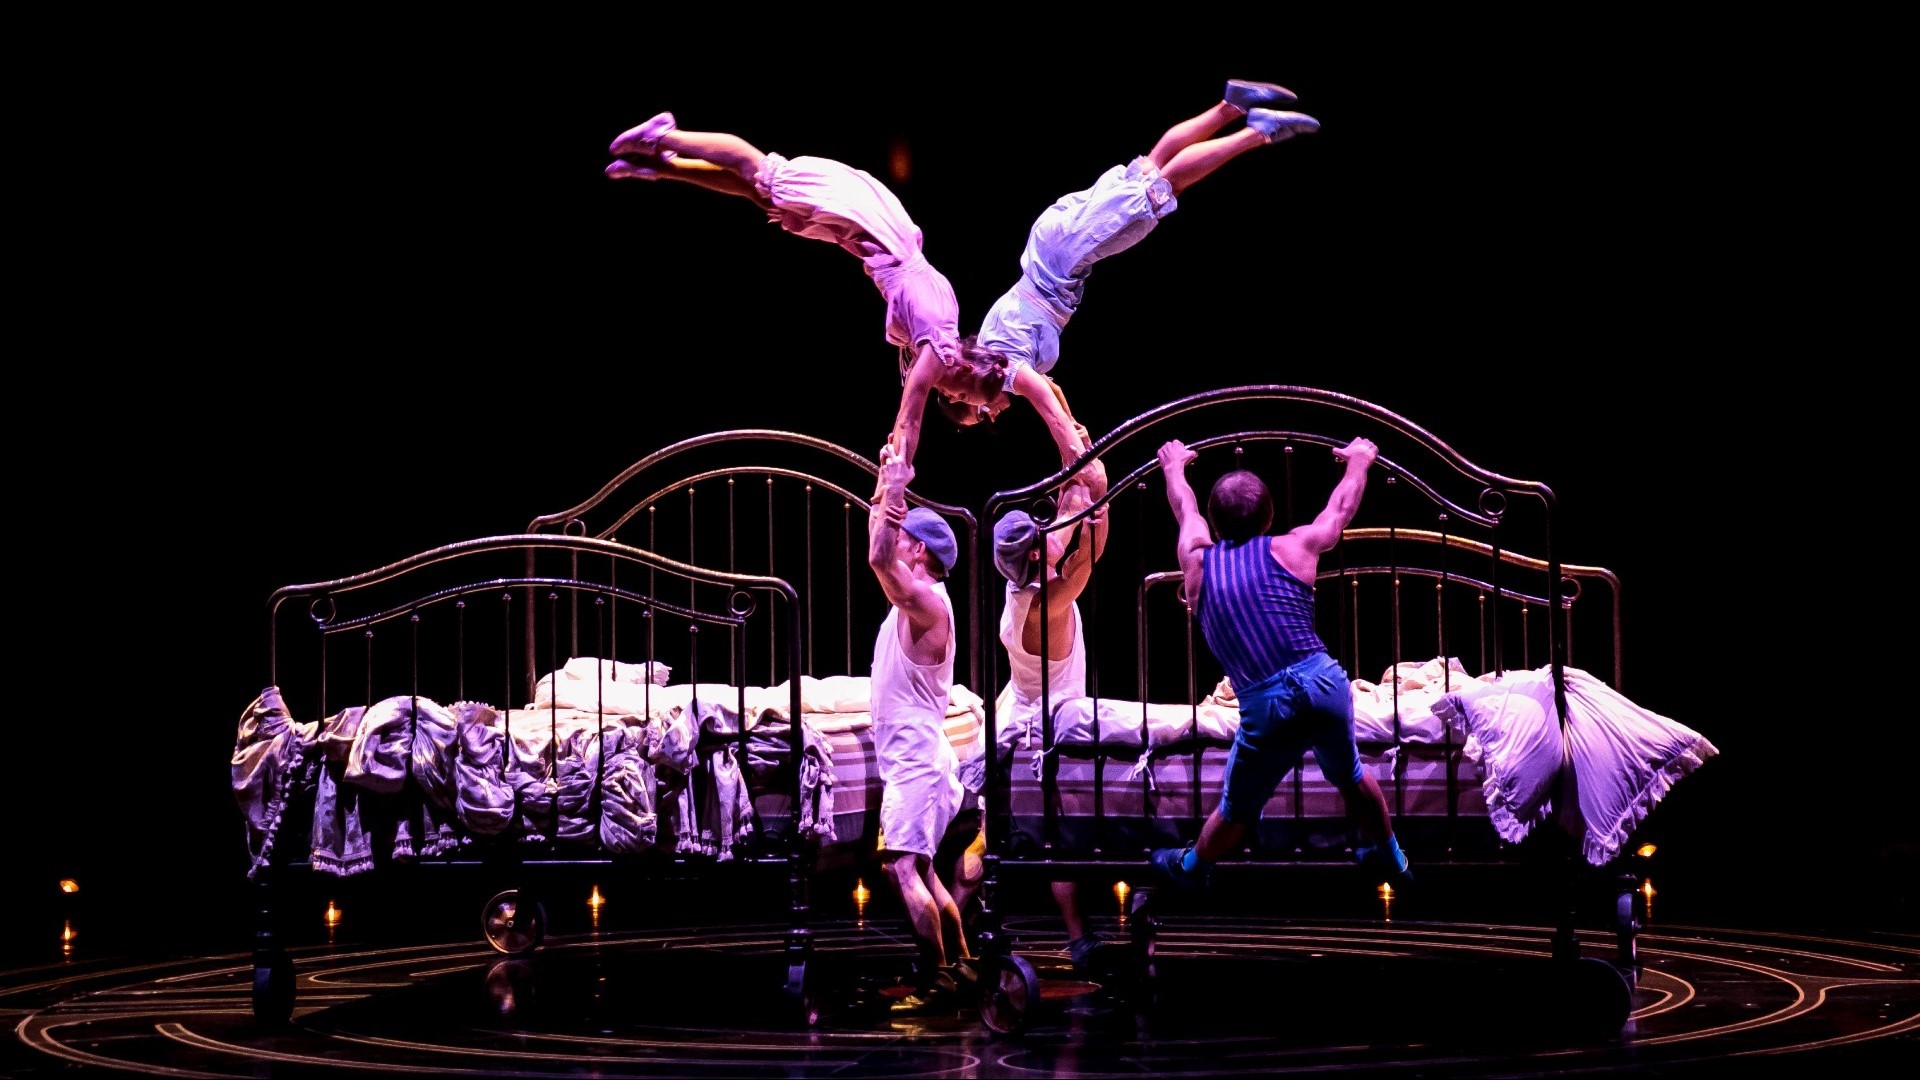 Cirque du Soleil show 'Corteo' coming to St. Louis